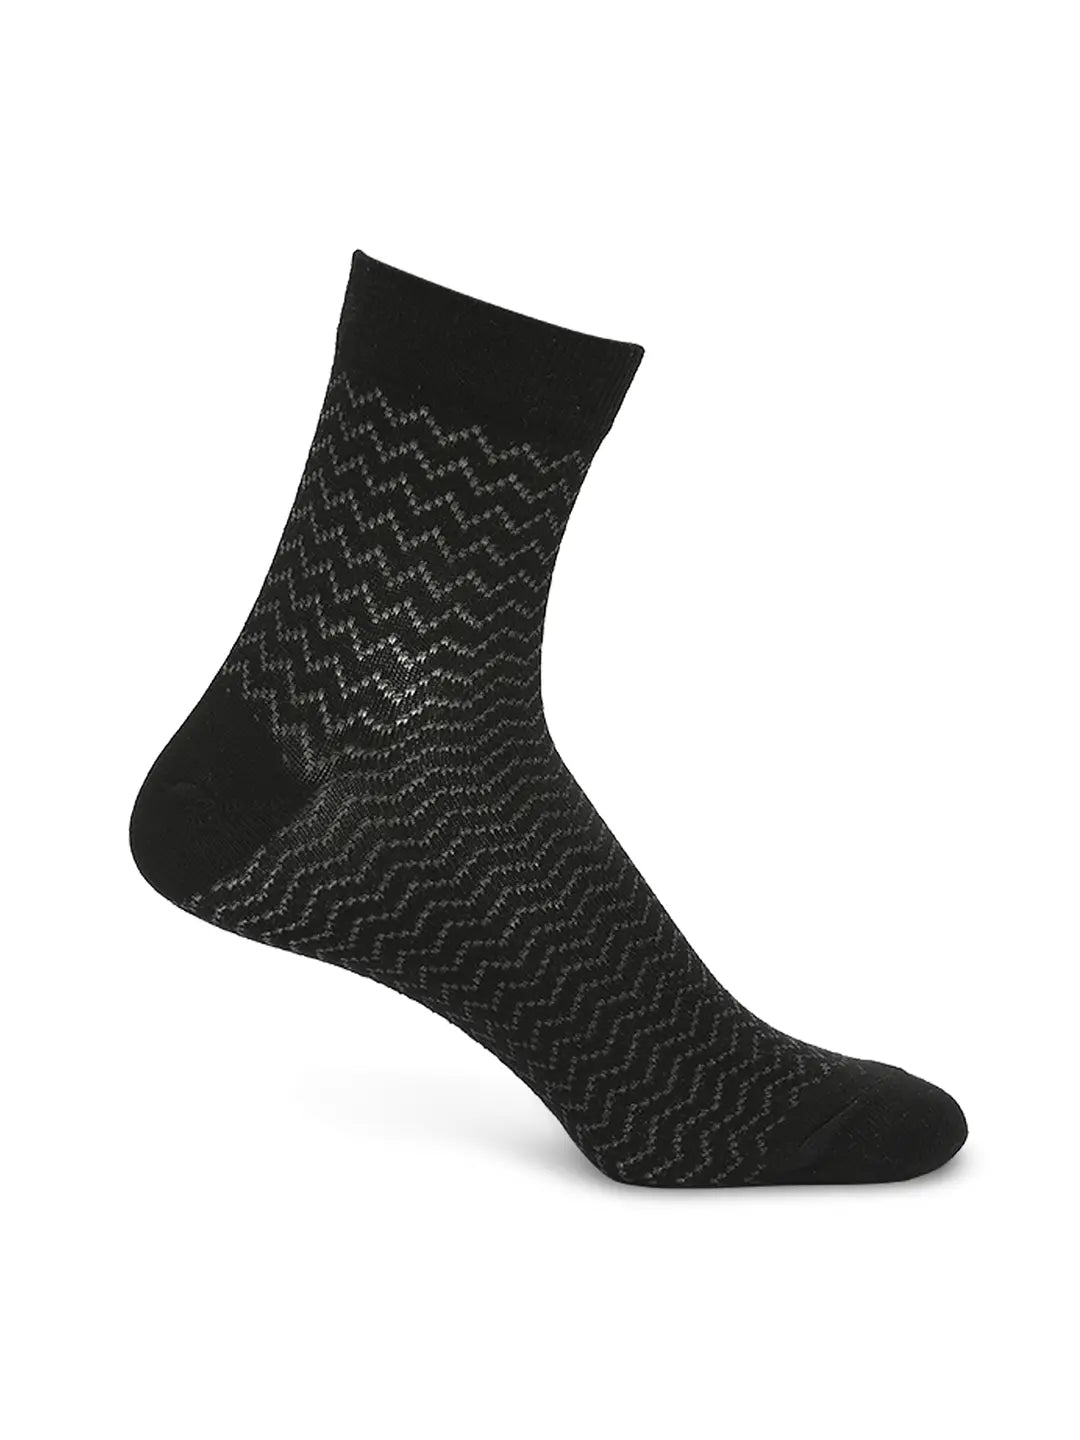 Men Premium Black & Grey Melange Ankle Length Socks - Pack Of 2- Underjeans by Spykar